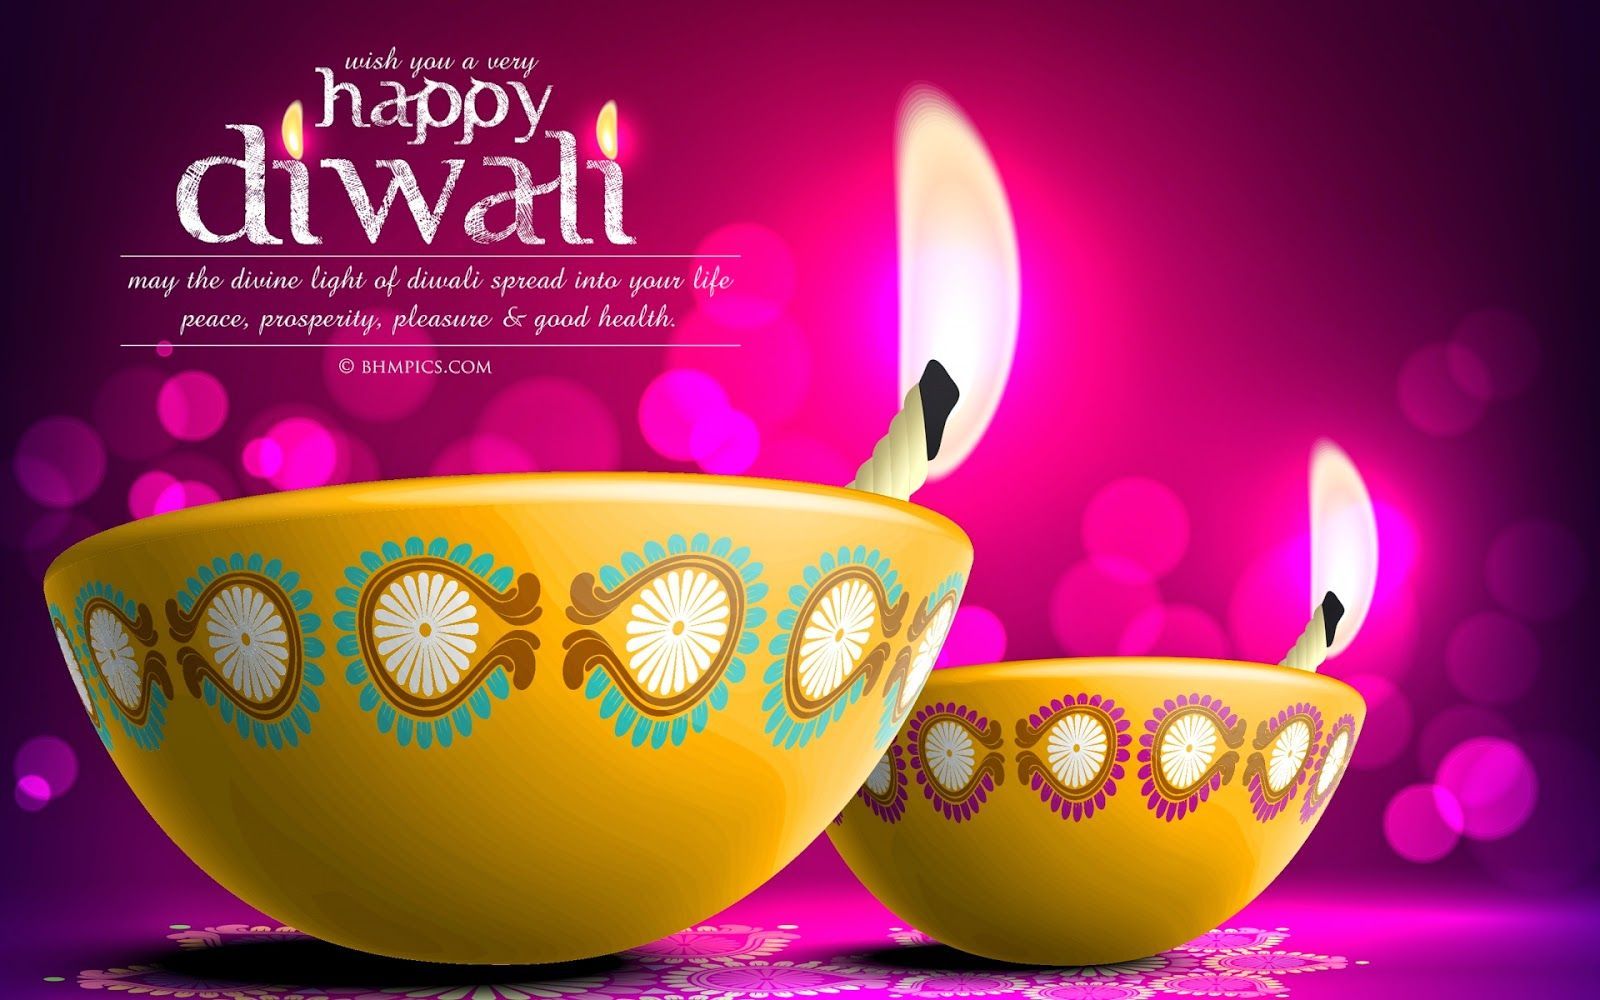 Happy Diwali HD Wallpaper for Desktop and Mobile phones. Happy diwali wallpaper, Diwali greetings, Diwali wishes